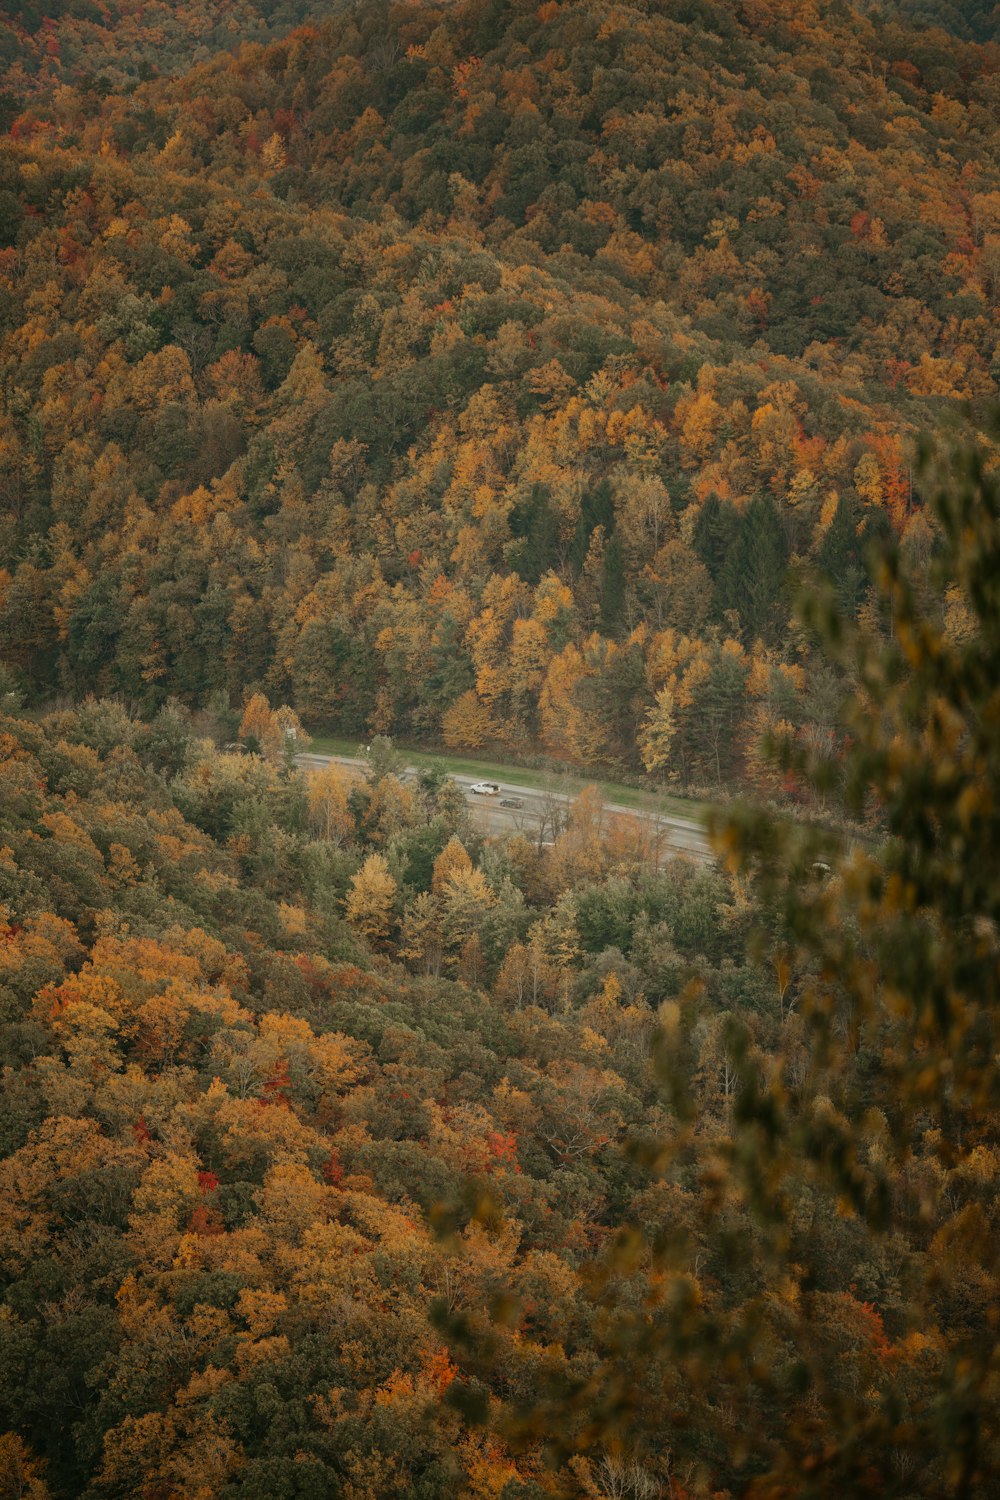 Una vista panorámica de una carretera rodeada de árboles